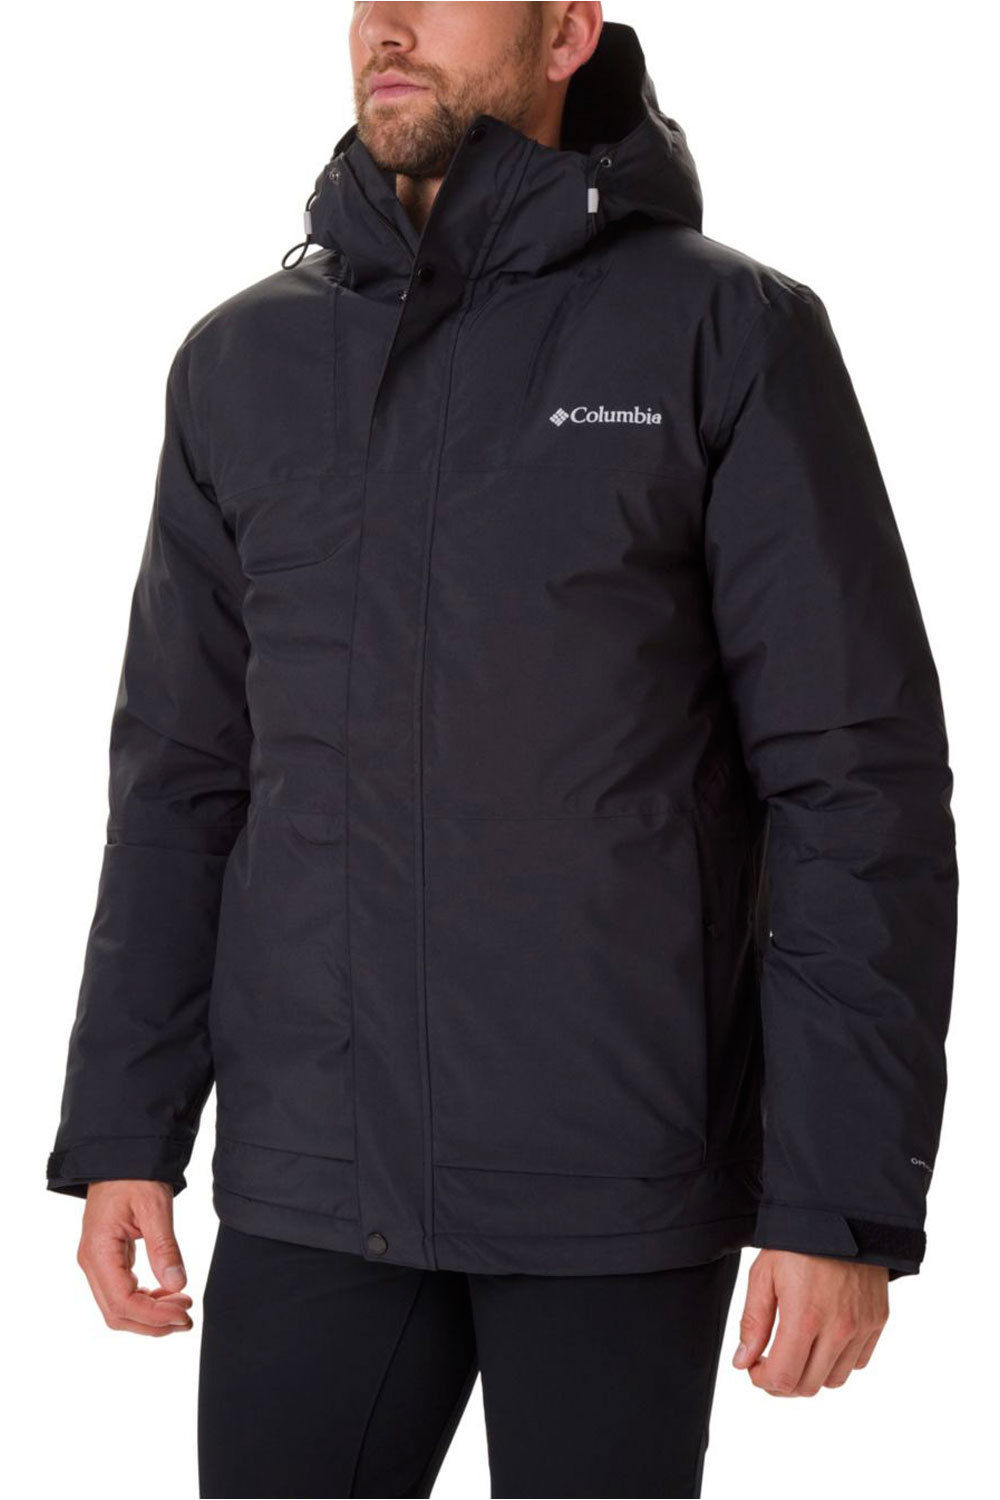 Columbia chaqueta impermeable insulada hombre Horizon Explorer Insulated Jacket vista frontal